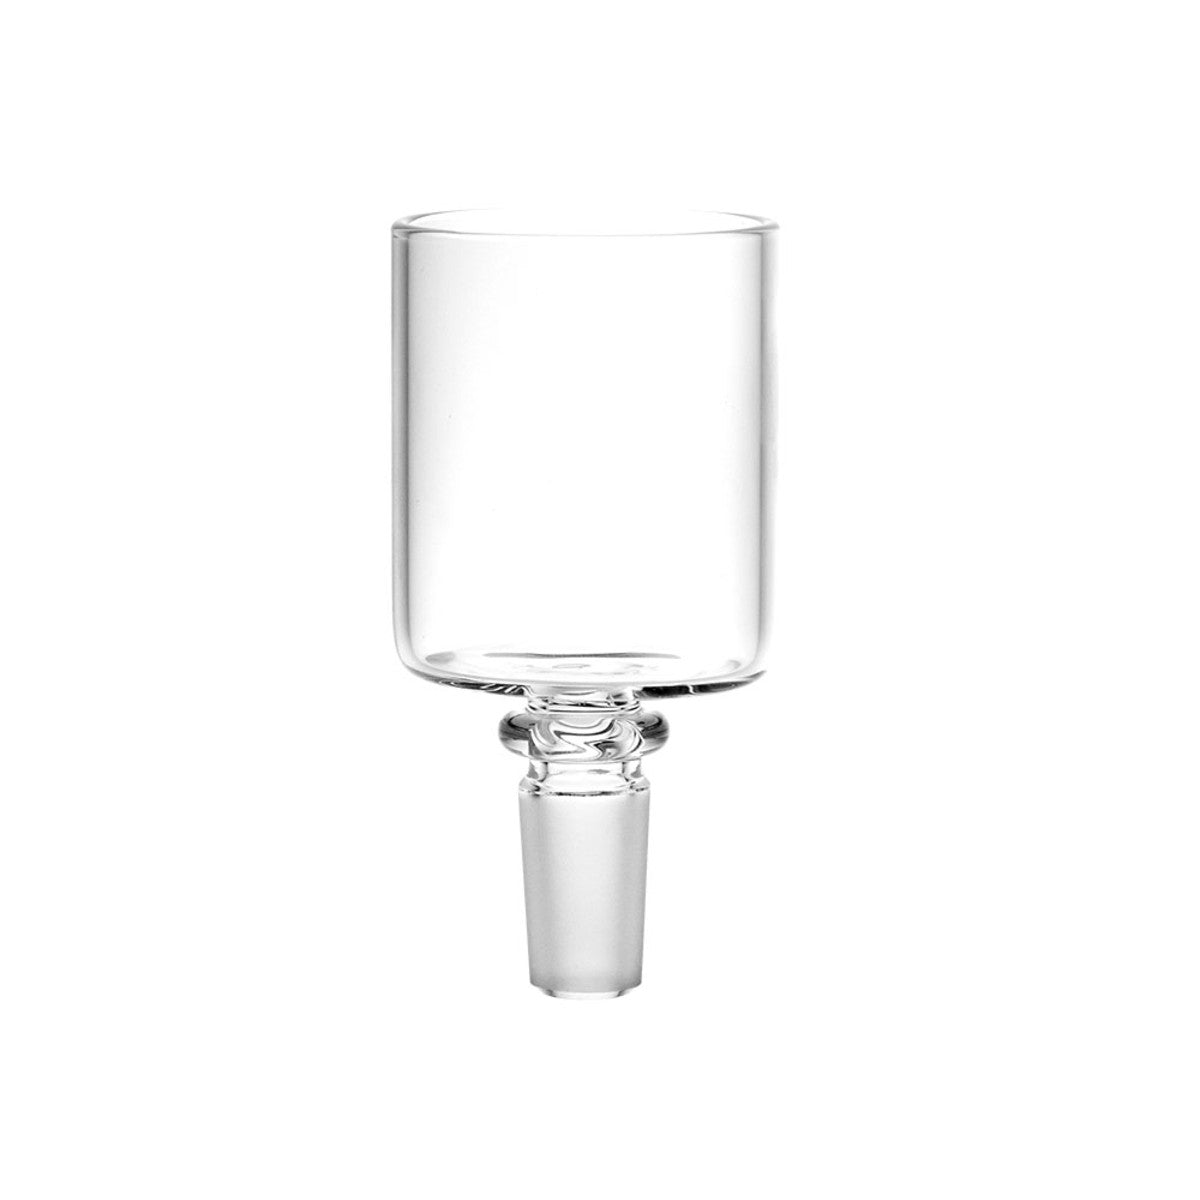 BOOM Puffco Proxy Inline Water Pipe Glass Attachment 14mm Male